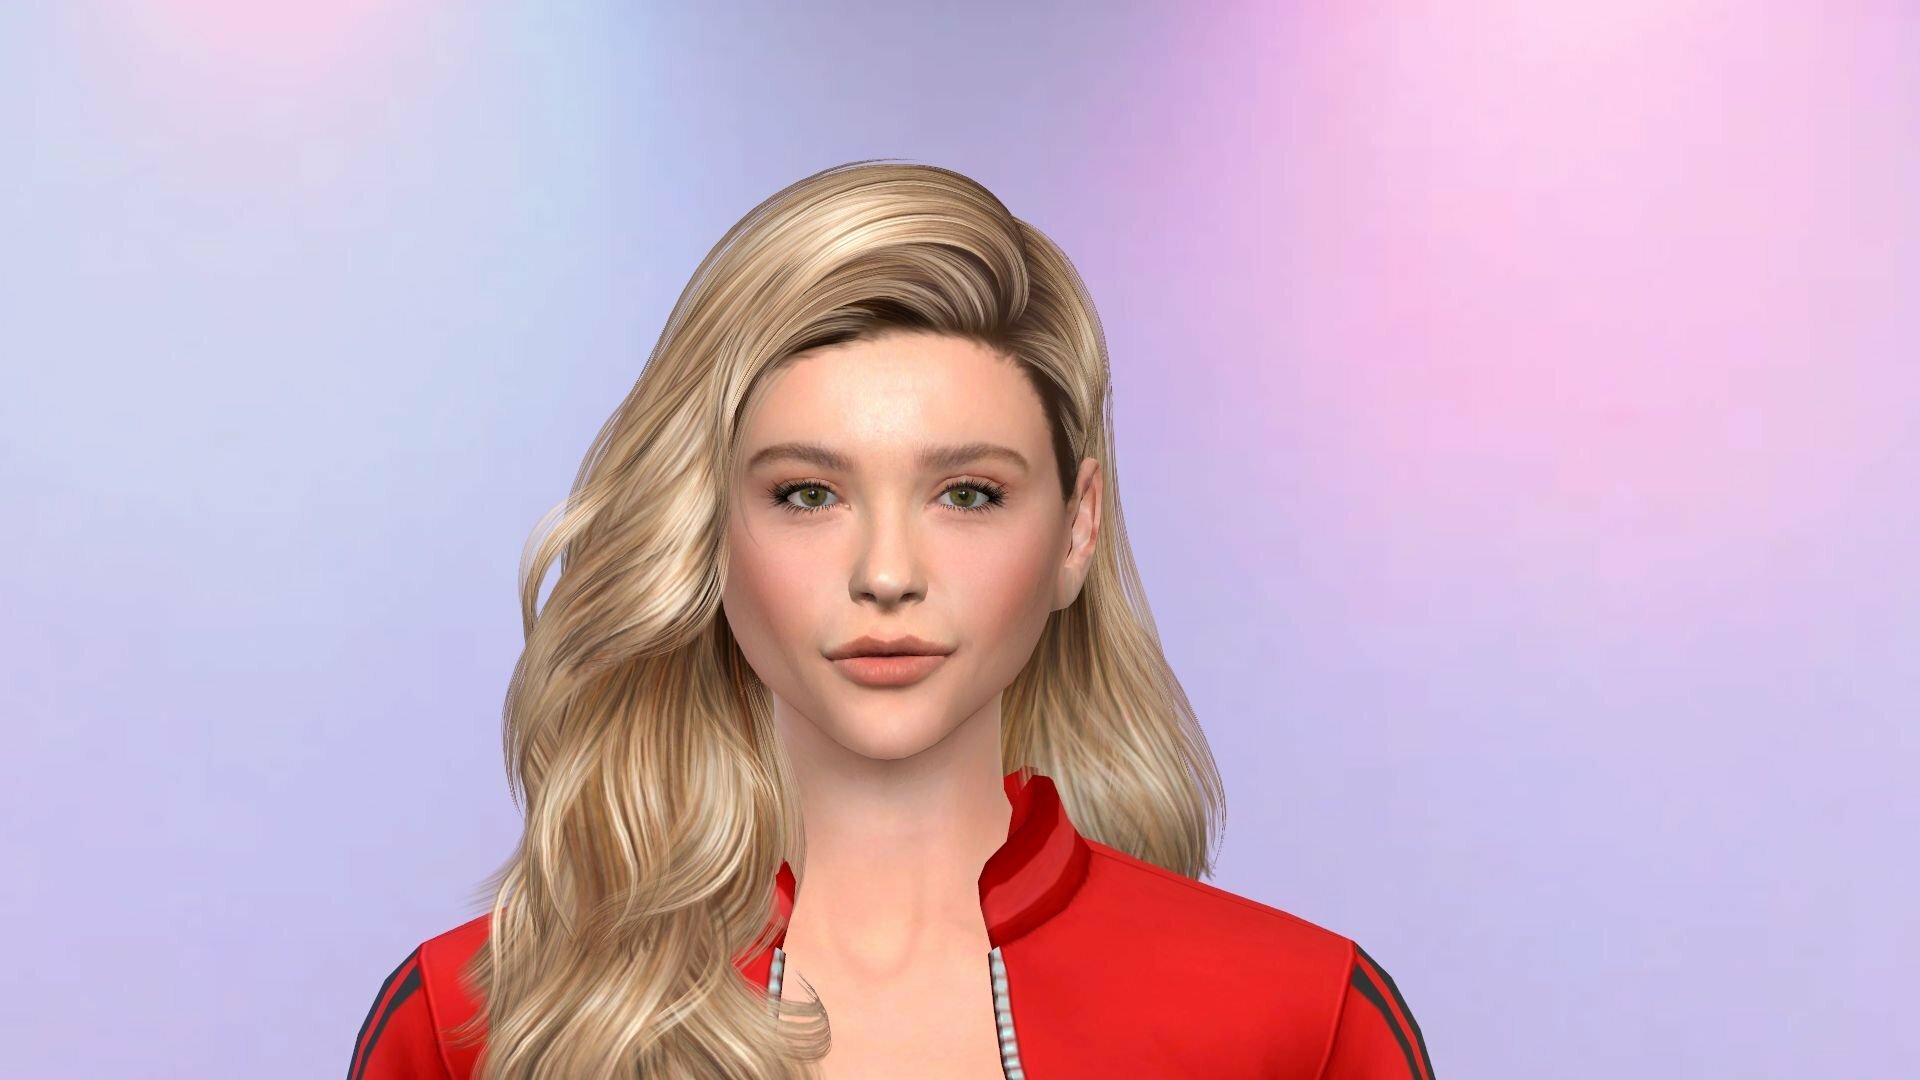 The Sims Resource - Chloe Grace Moretz